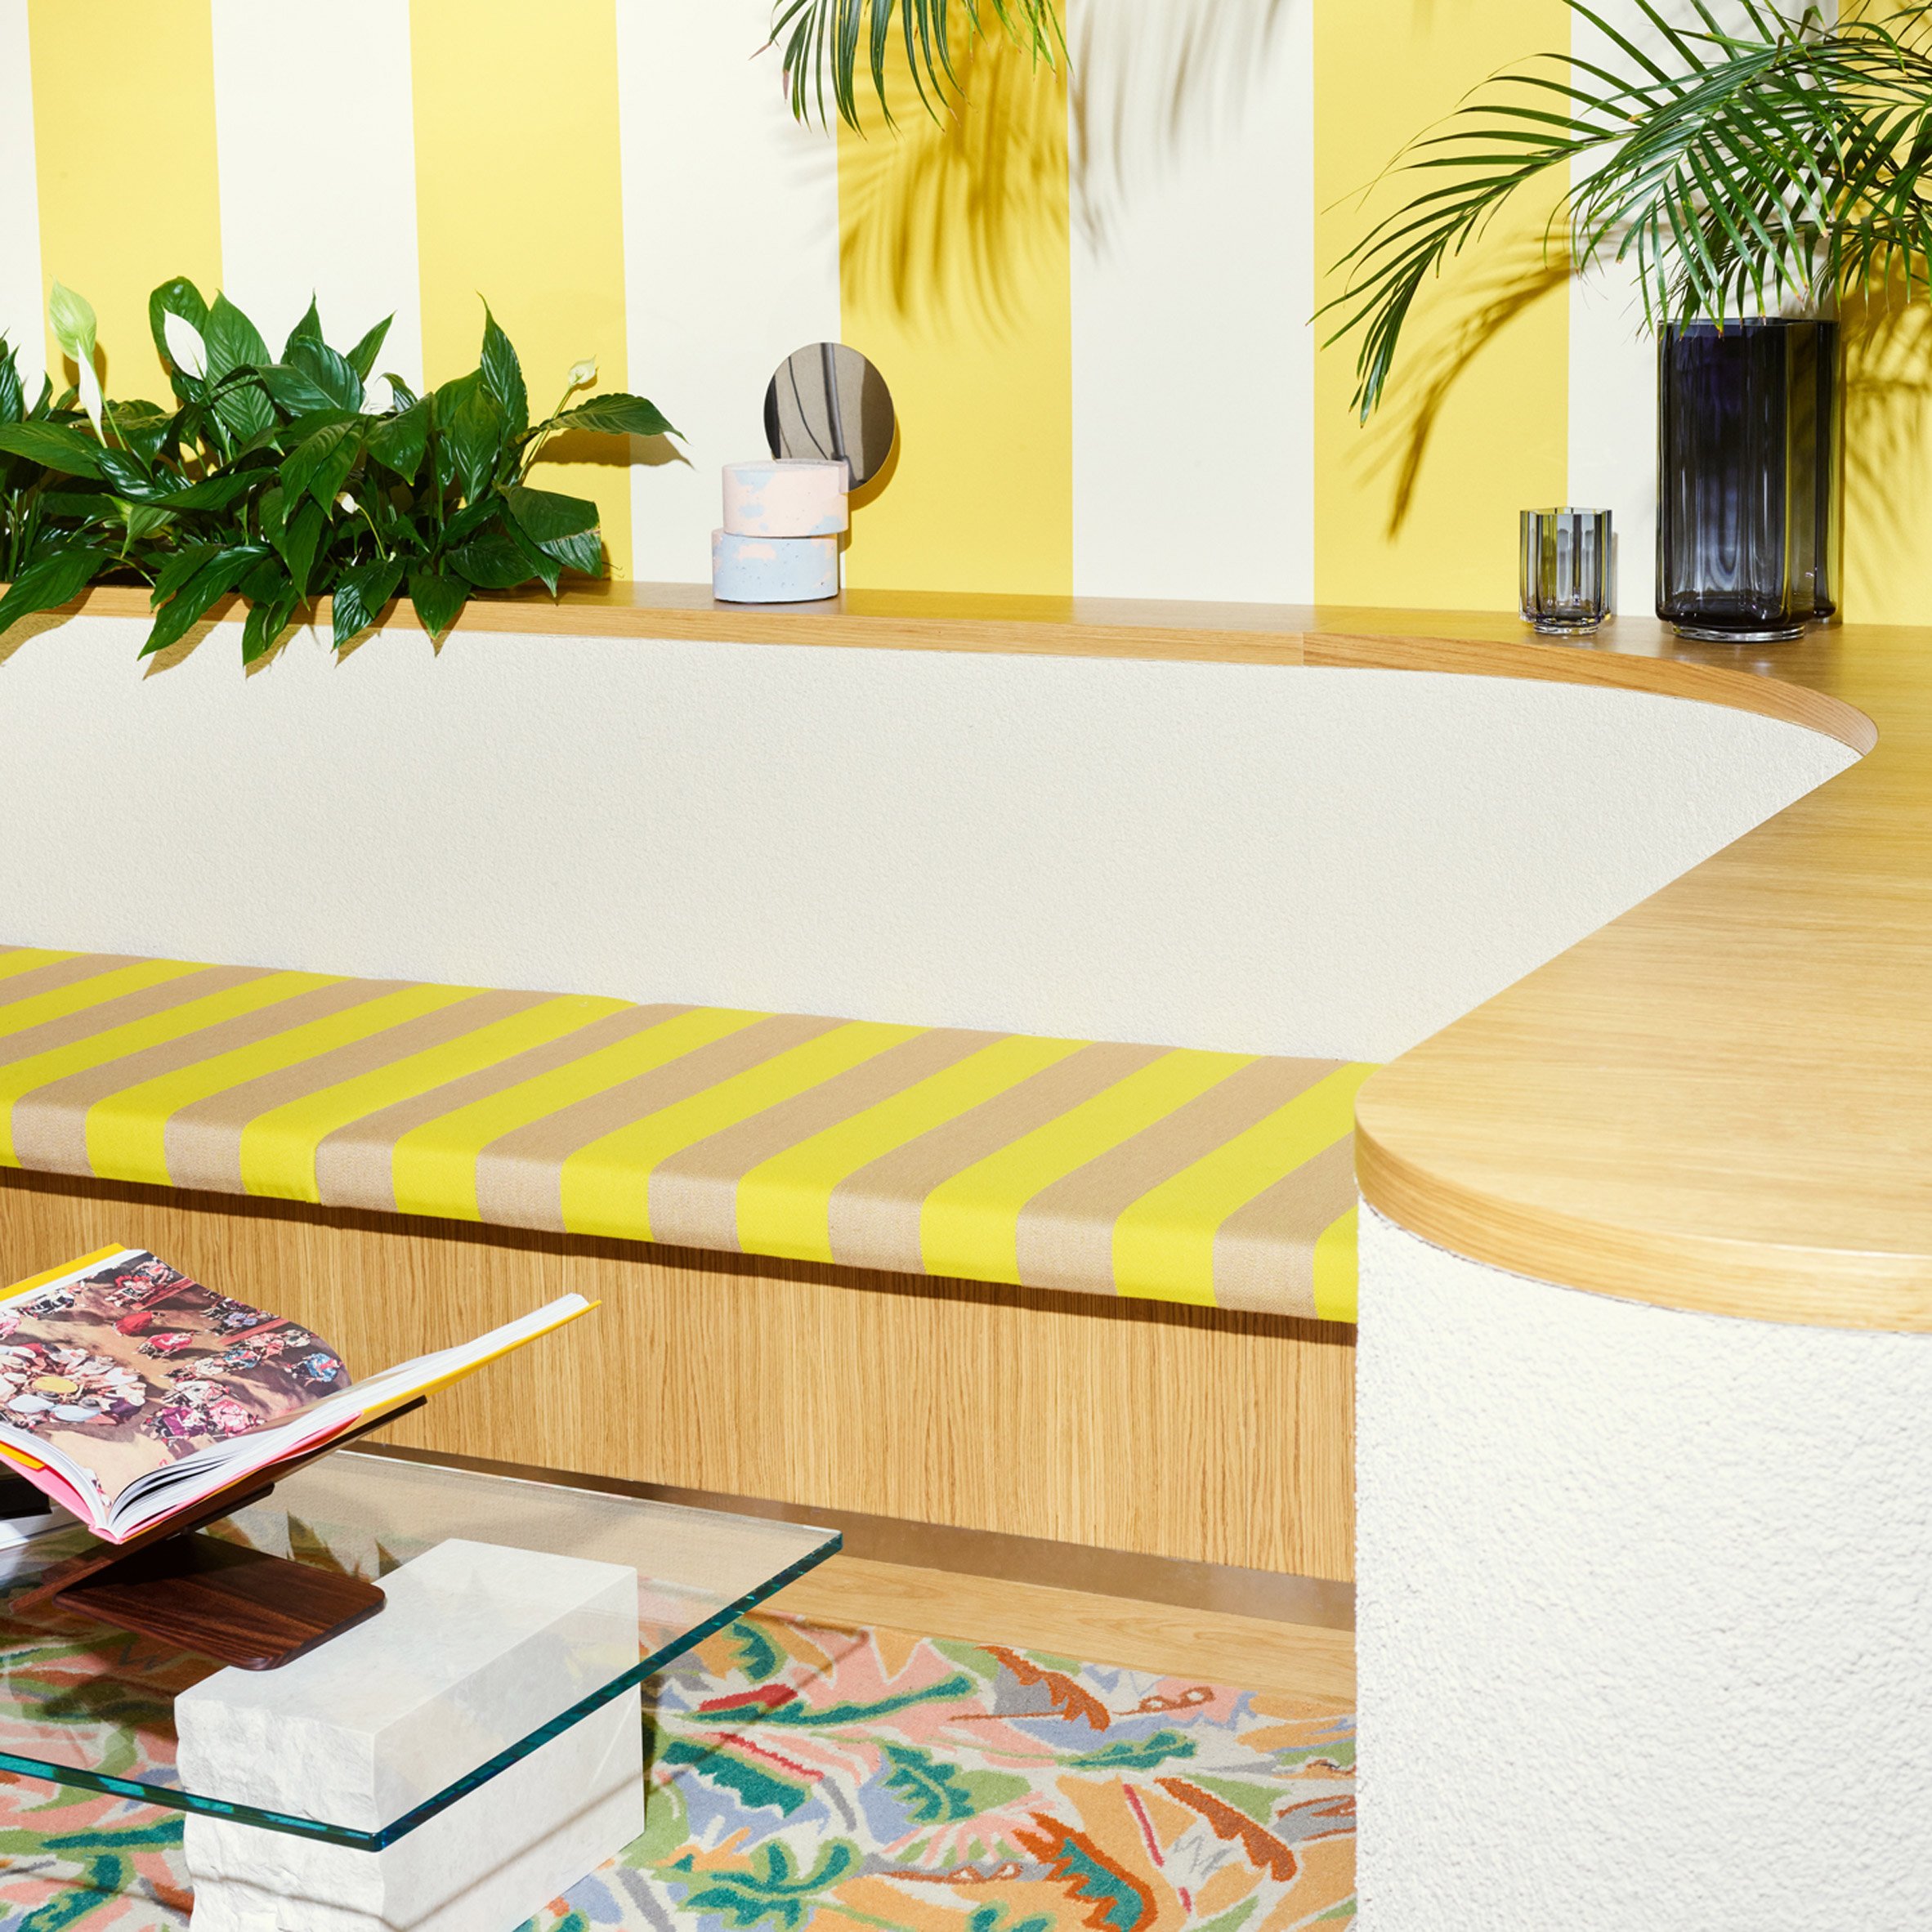 Bold striped interior inspired by Alain Delon in Moniker men's department interior by Snøhetta